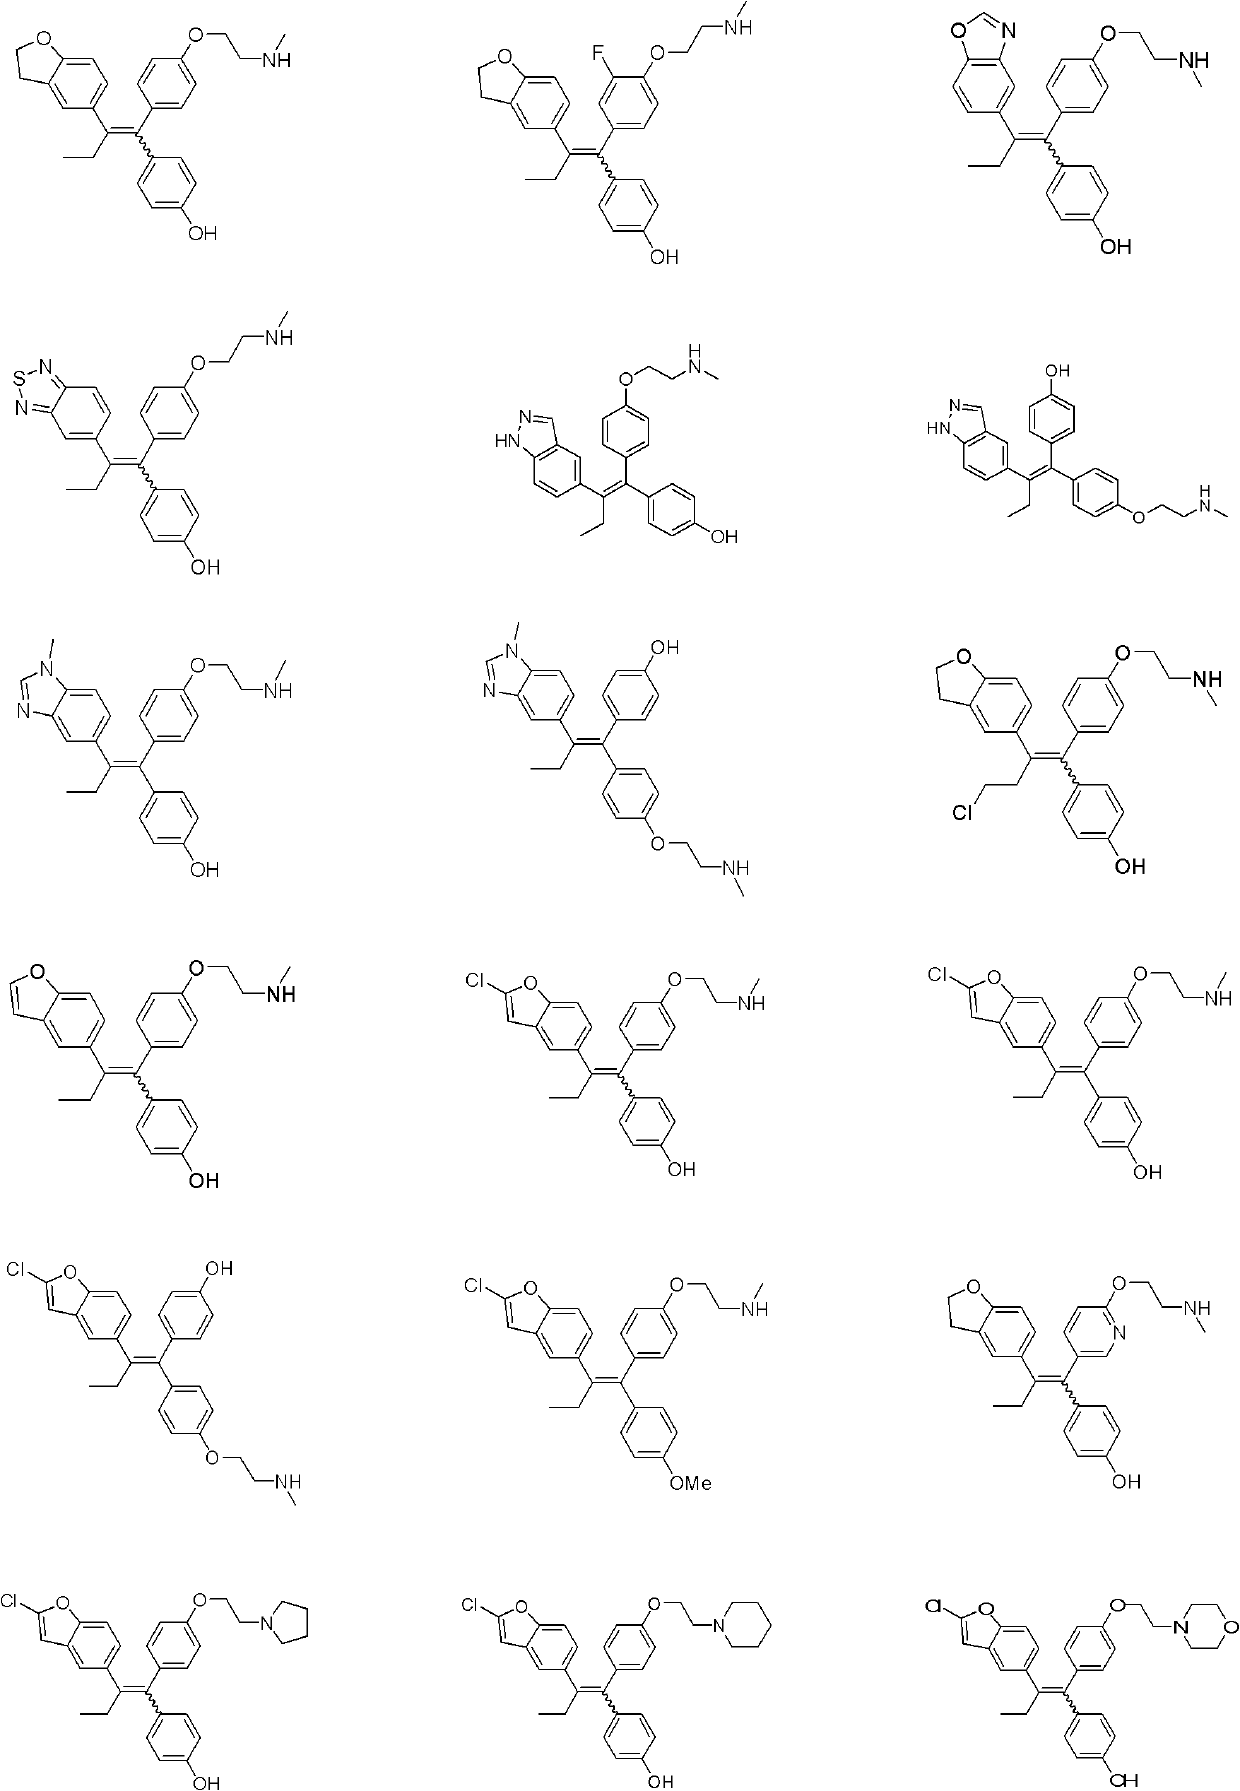 Ethylene derivative serving as selective estrogen receptor modulators (SERMs)